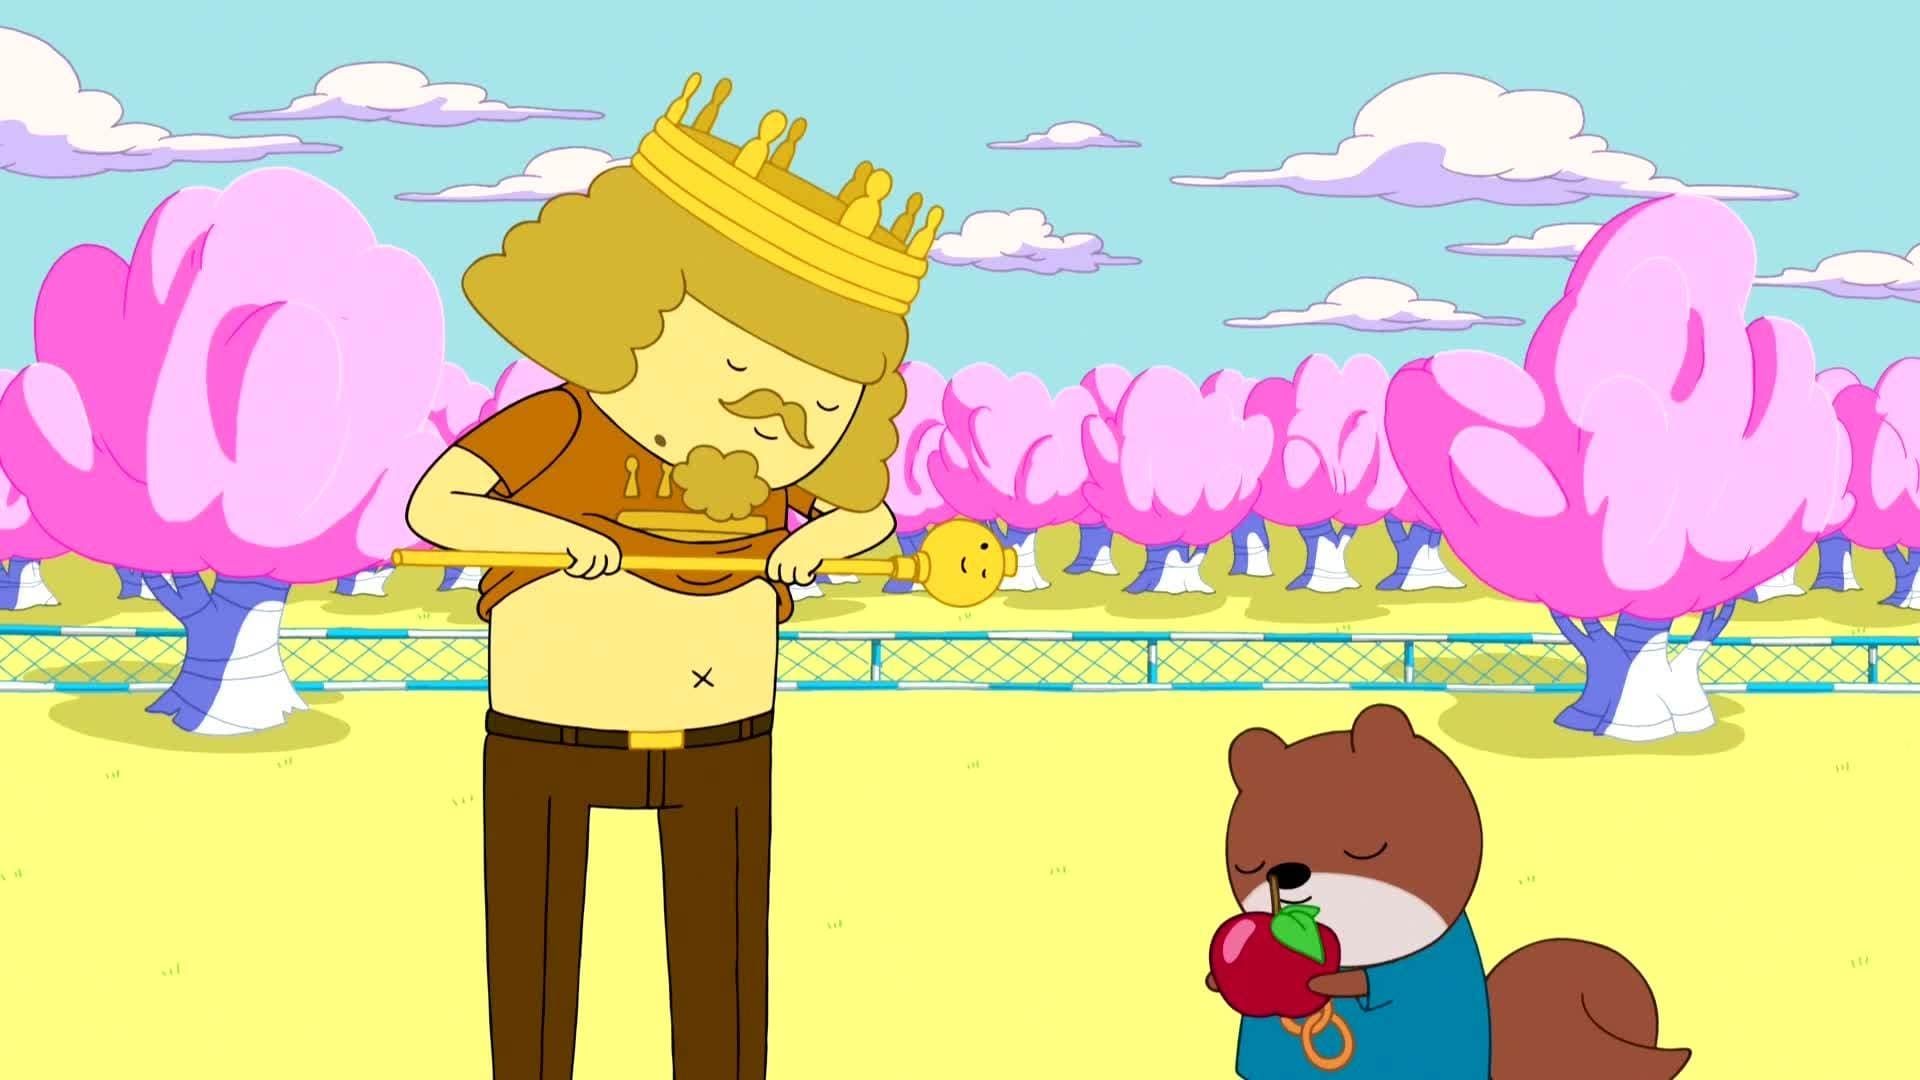 Watch Adventure Time season 6 episode 37 streaming online